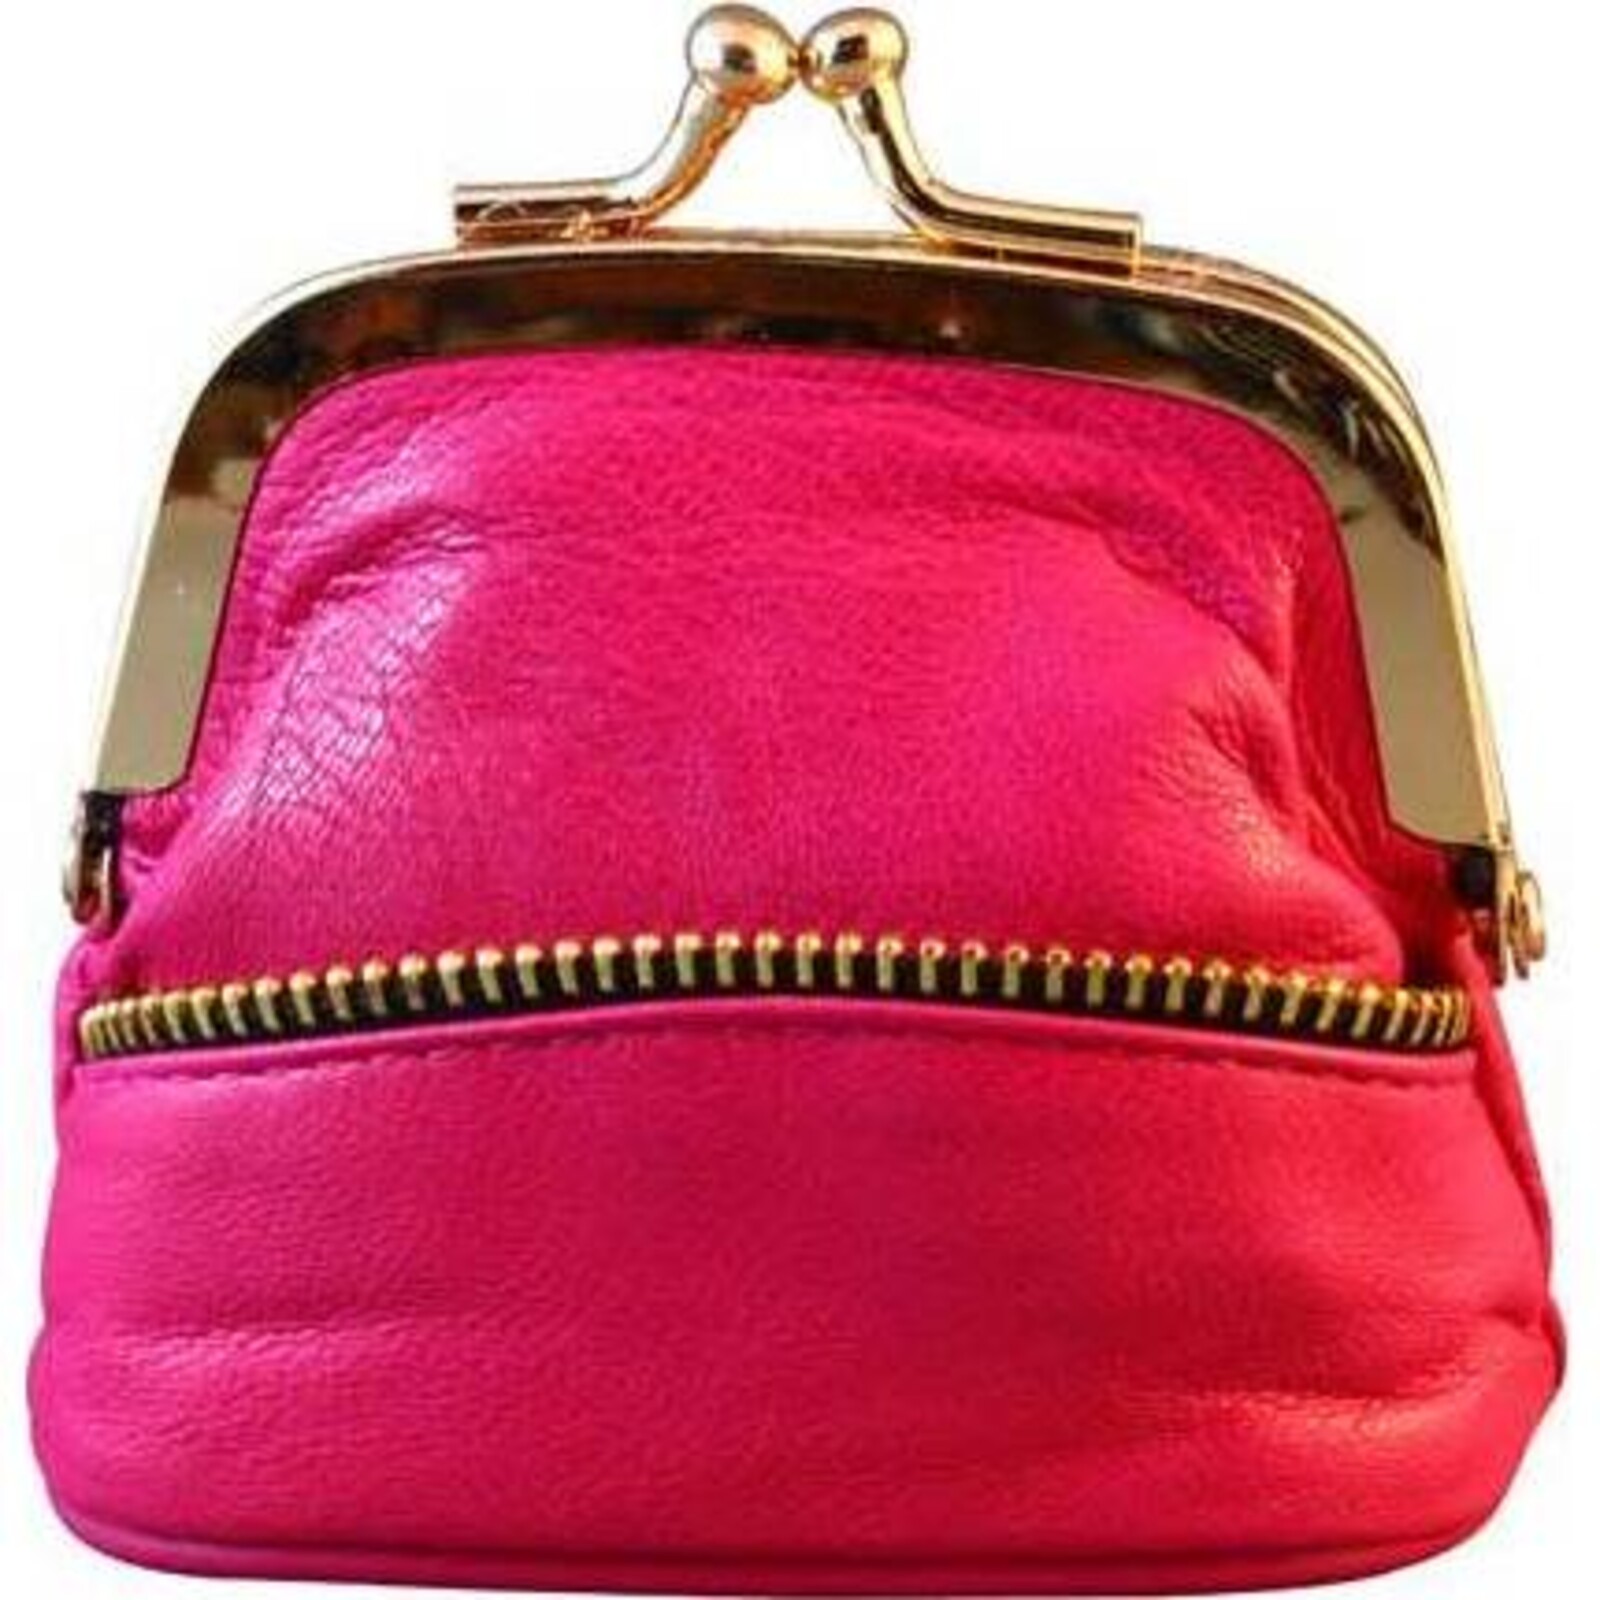 Leather Zipper Purse - Pink